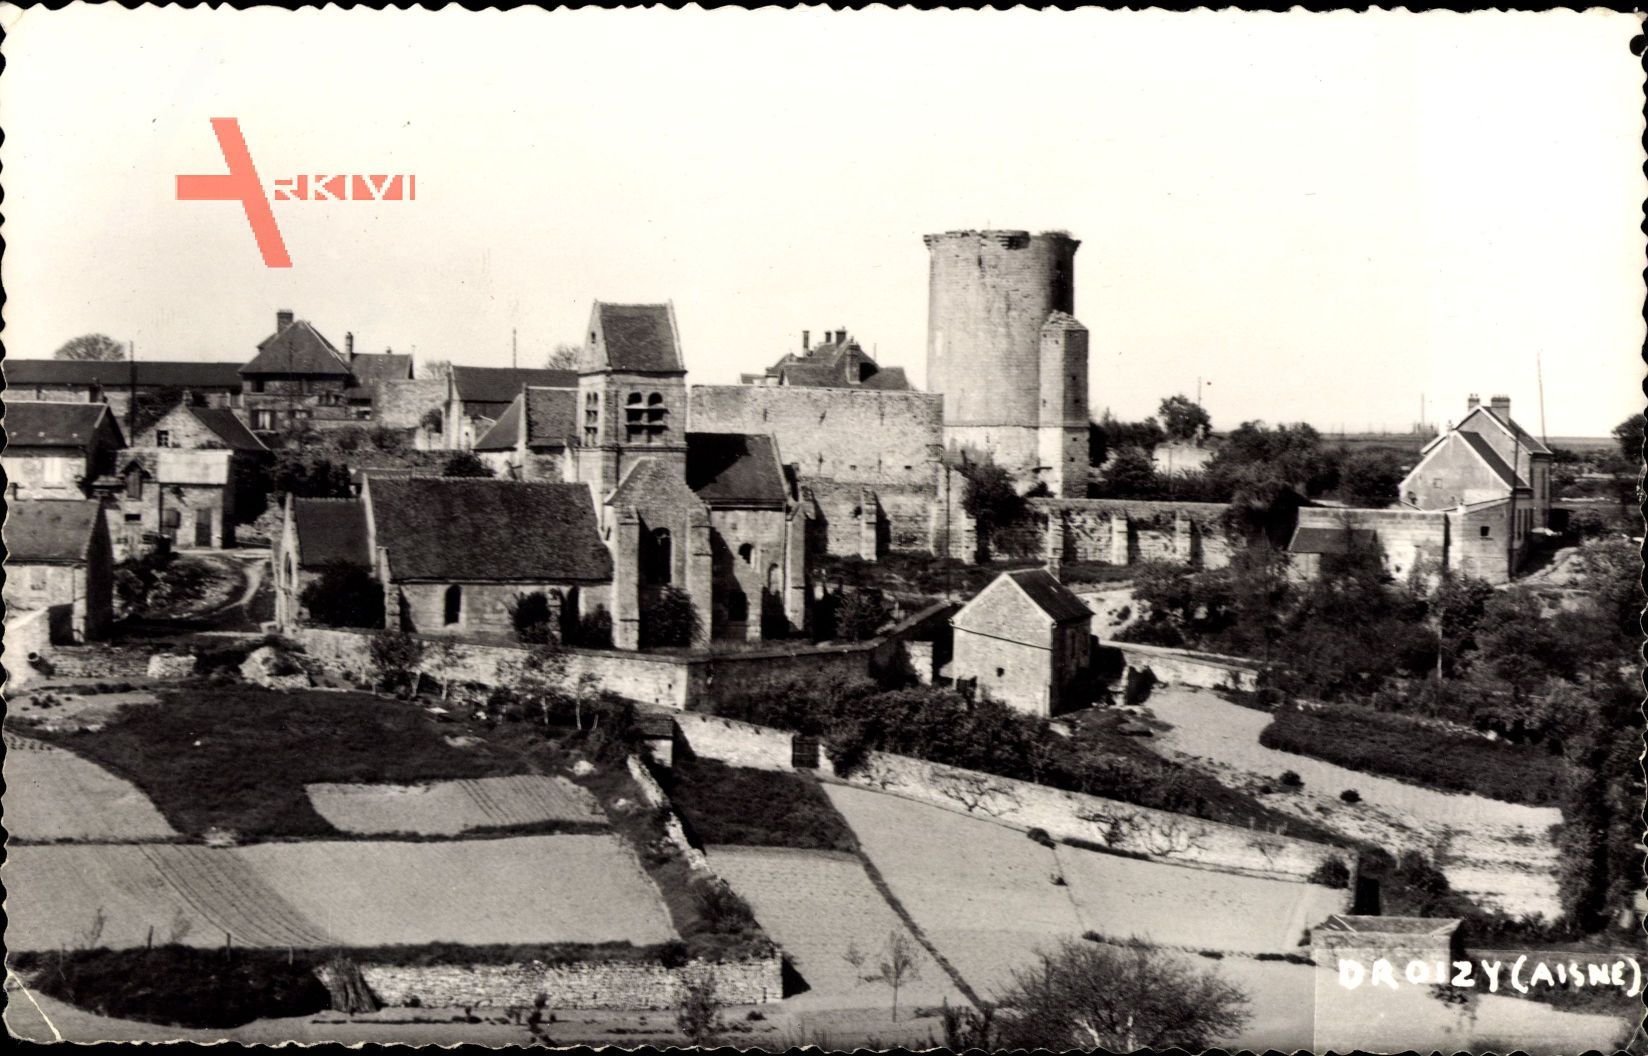 Droizy Aisne, Blick auf den Ort über Felder hinweg, Turm, Kirche, Häuser